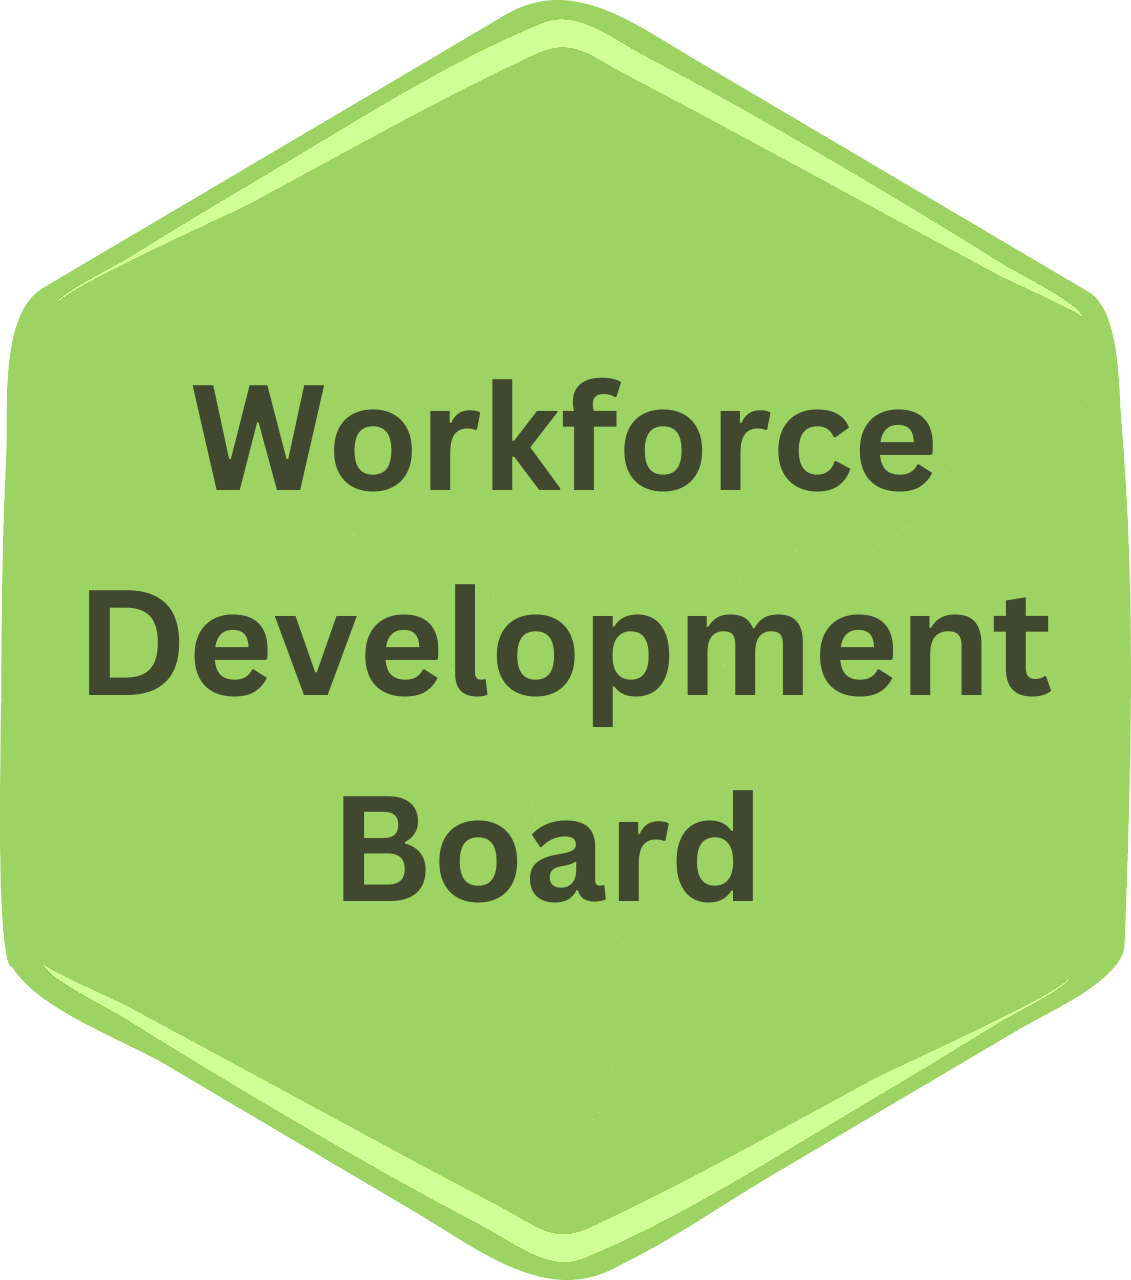 Workforce Development Board policies